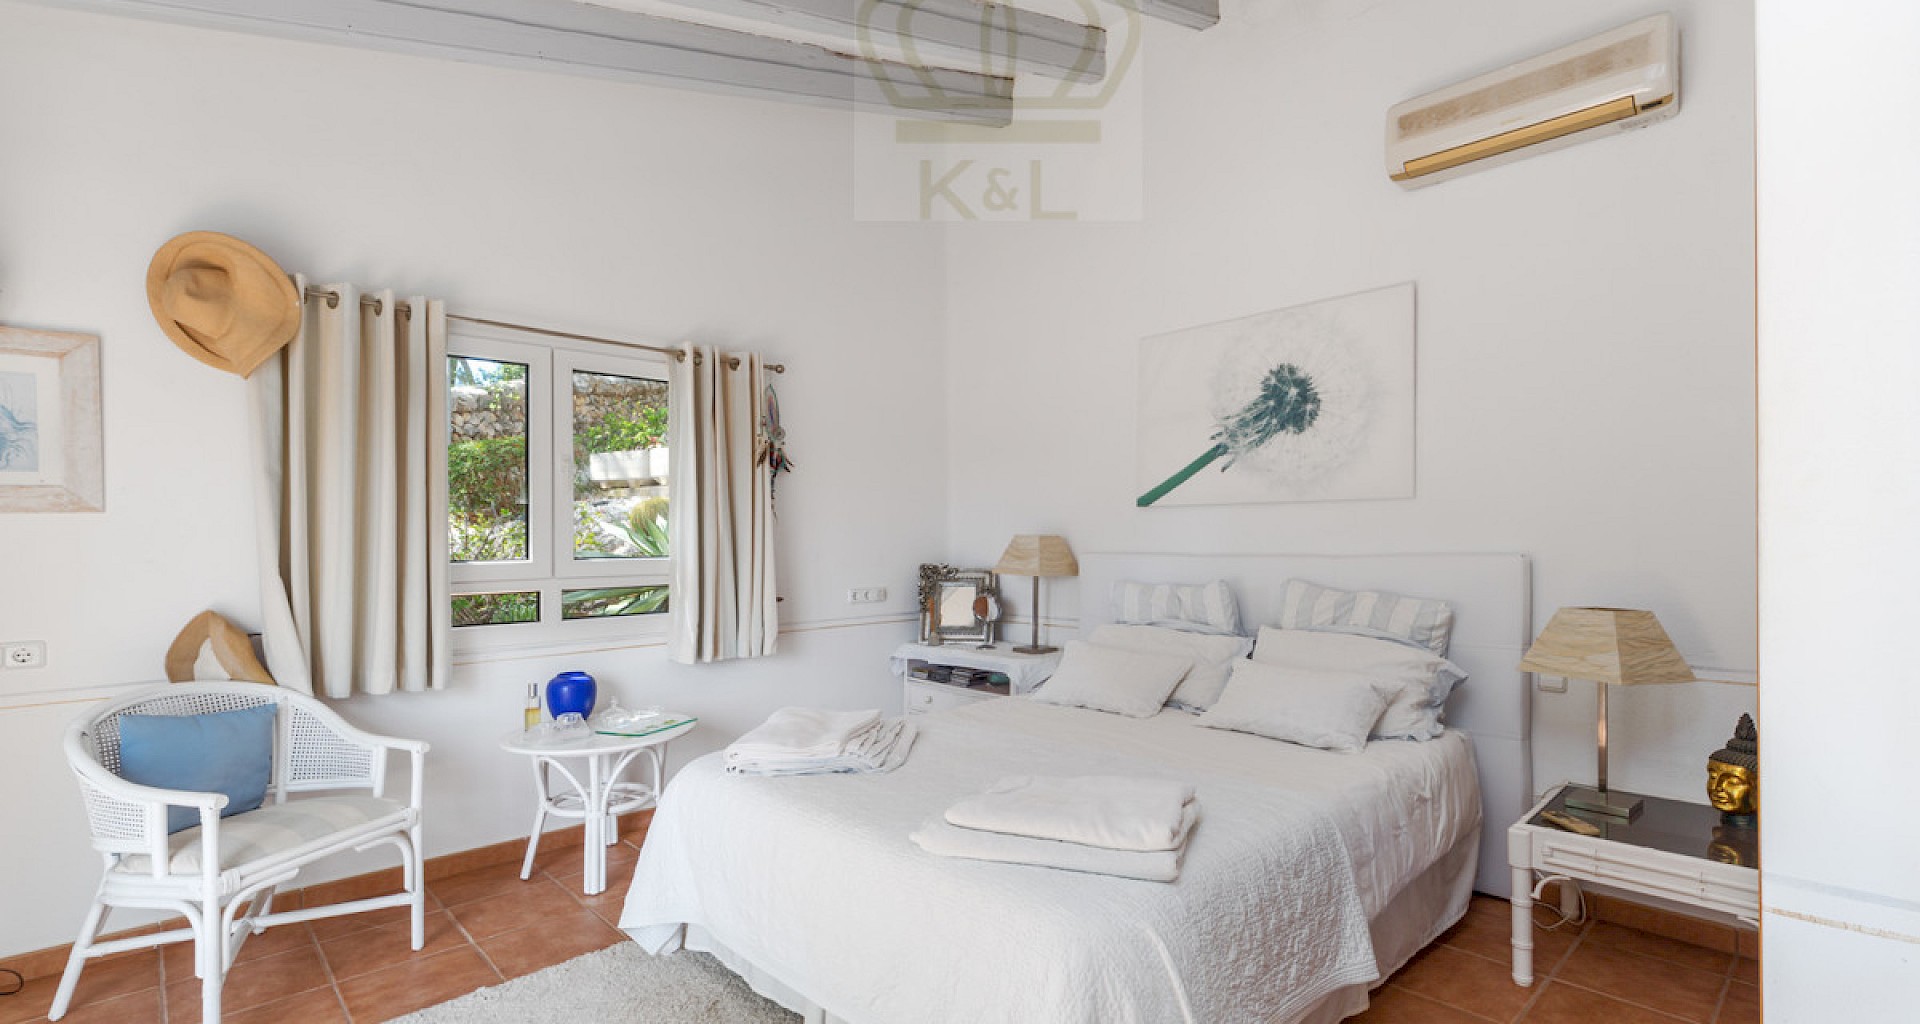 KROHN & LUEDEMANN Mediterranean villa in Port Andratx with lots of charm and potential 1 Studio